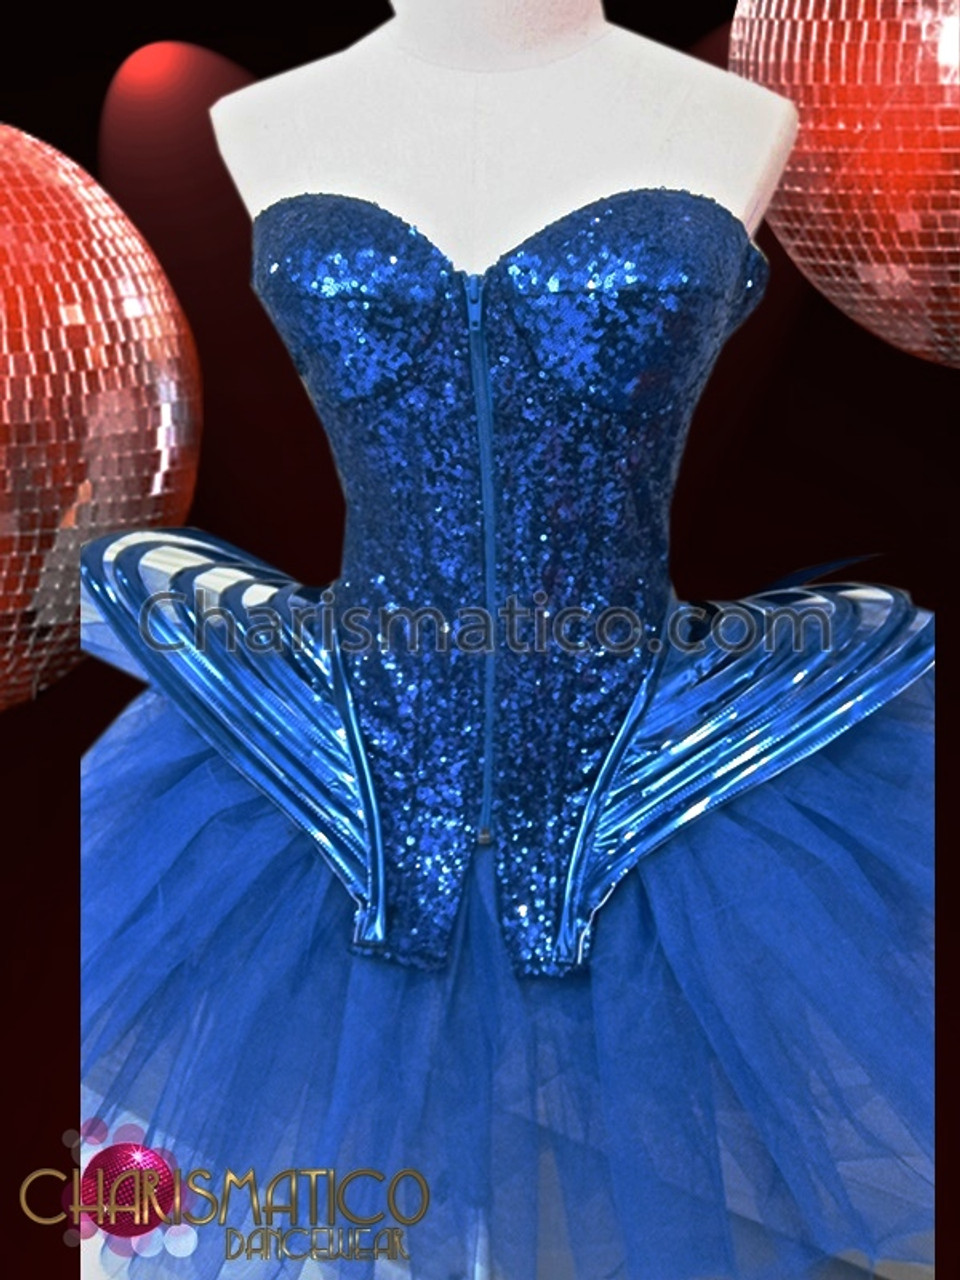 CHARISMATICO Metallic Royal Blue Sequined Gaga Corset and Net Ruffled Tutu 